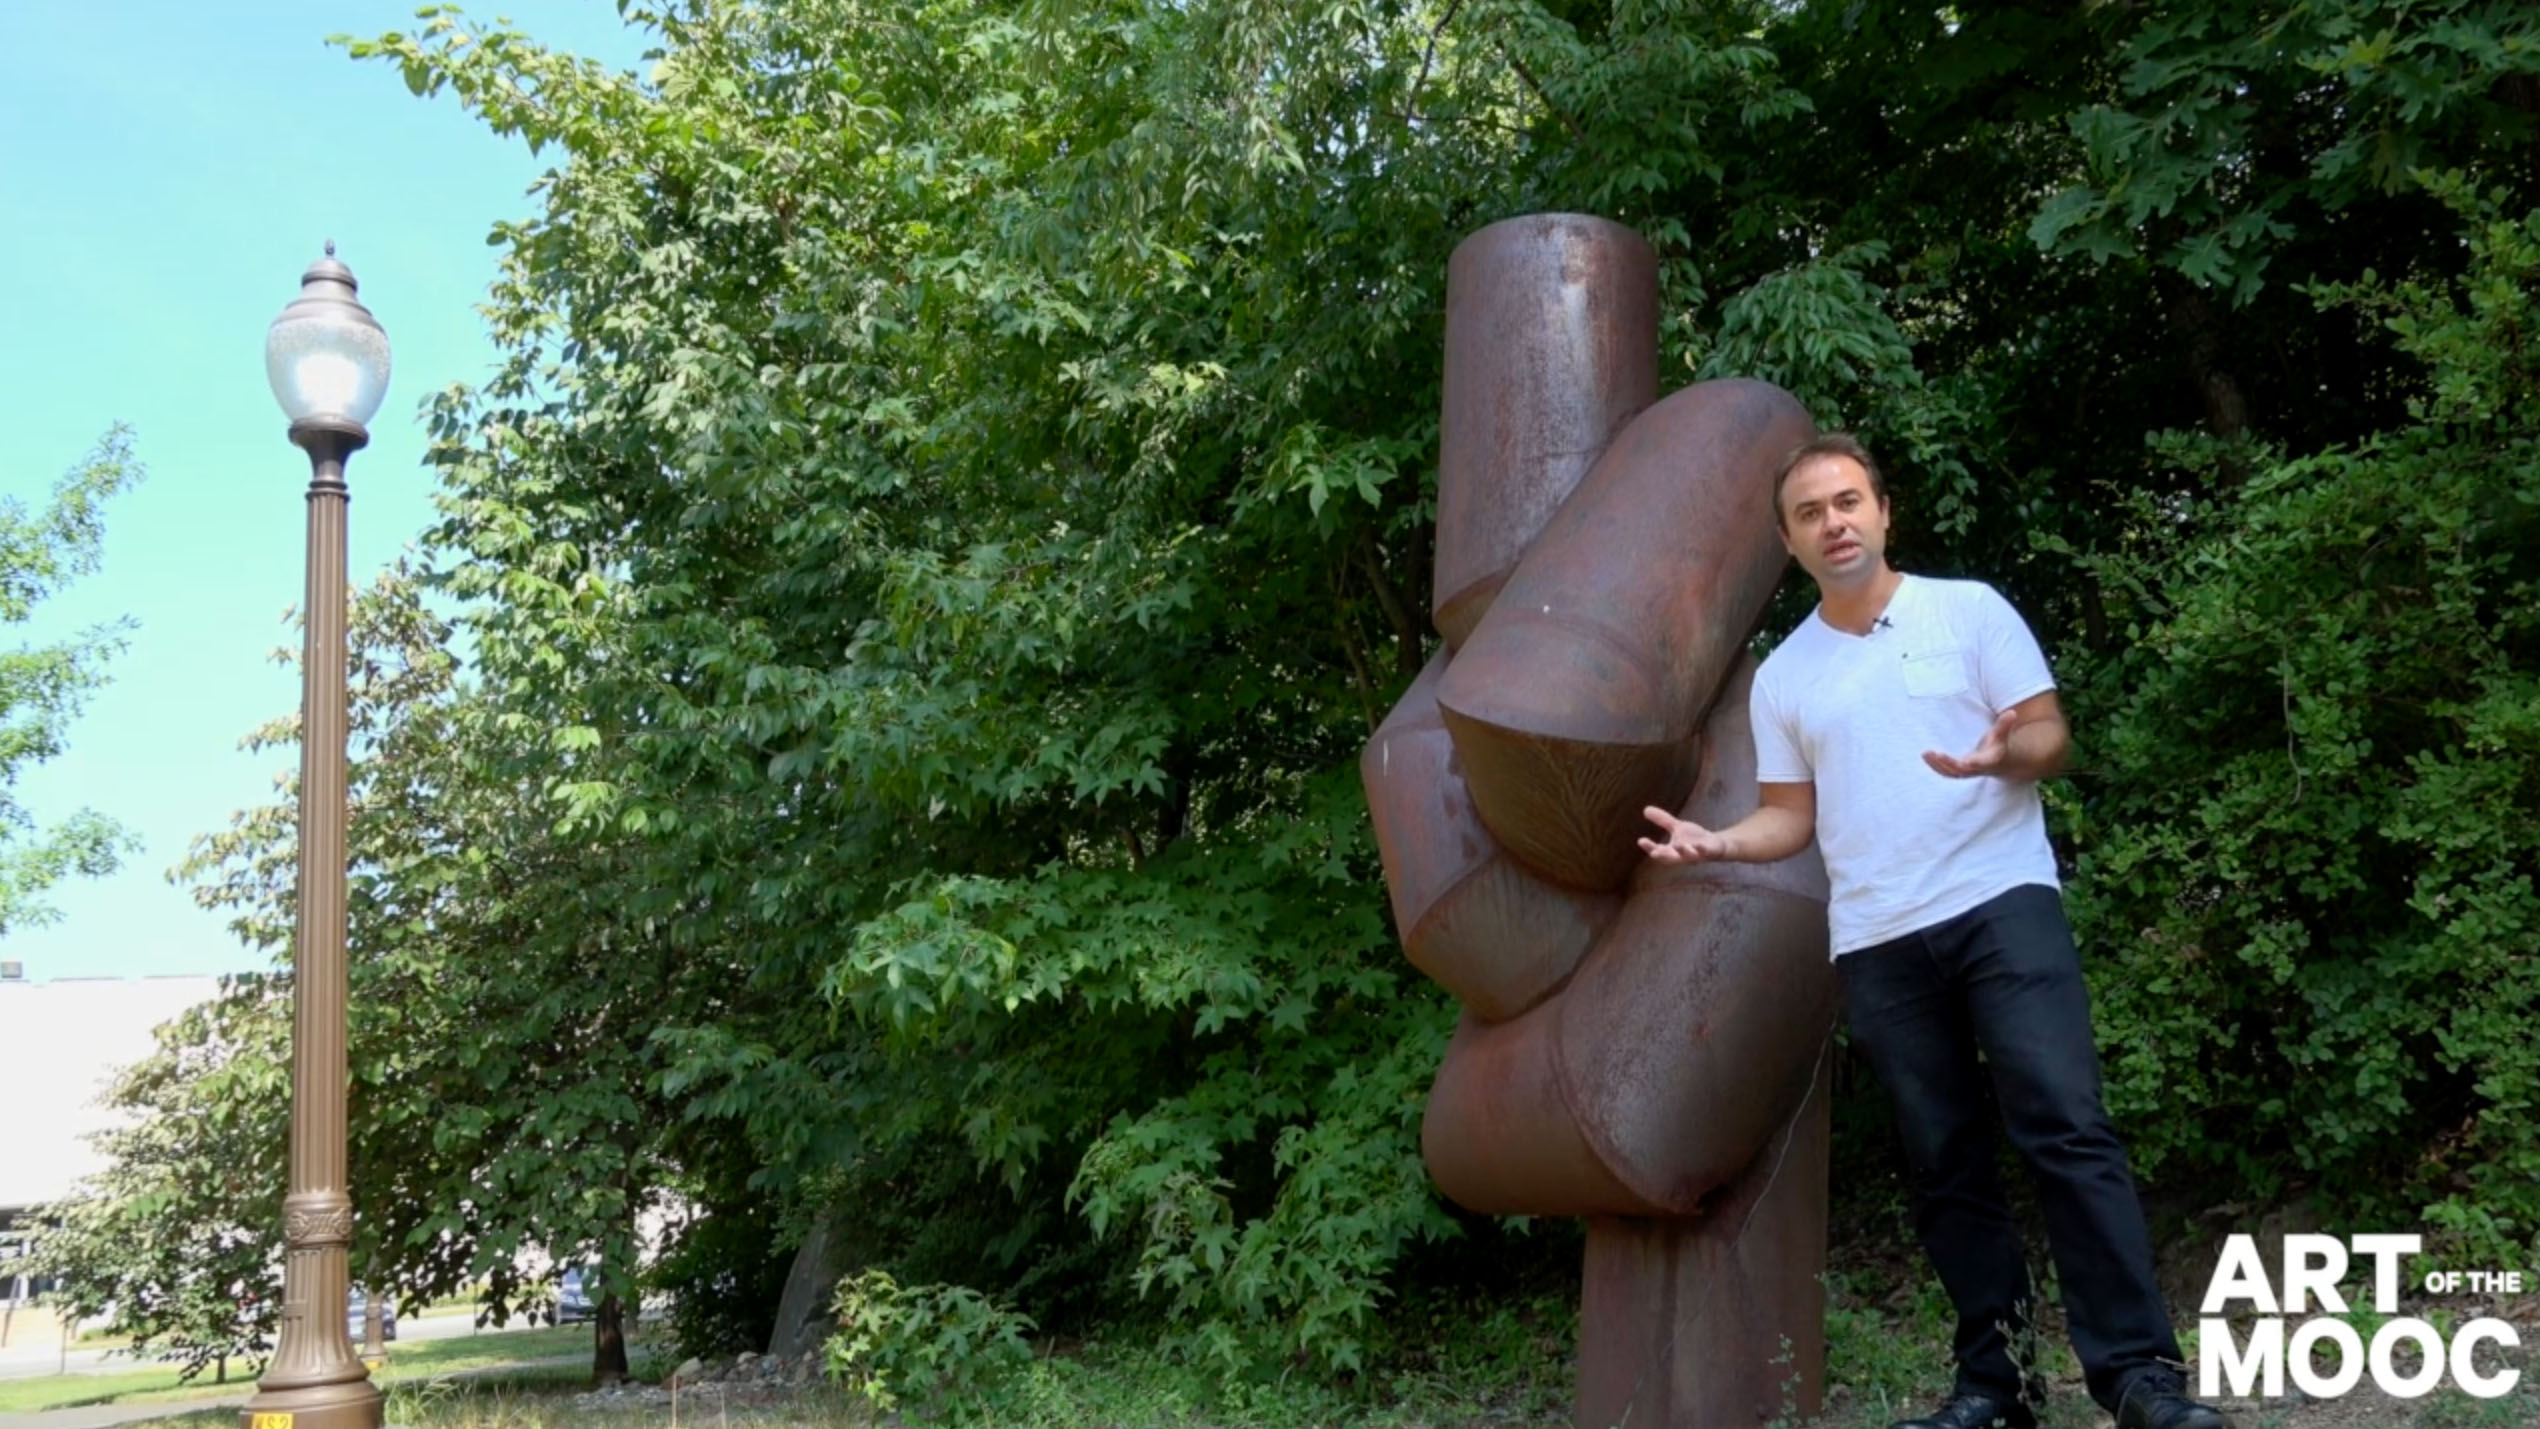 Pedro Lasch gestures next to an outdoor scehdule.